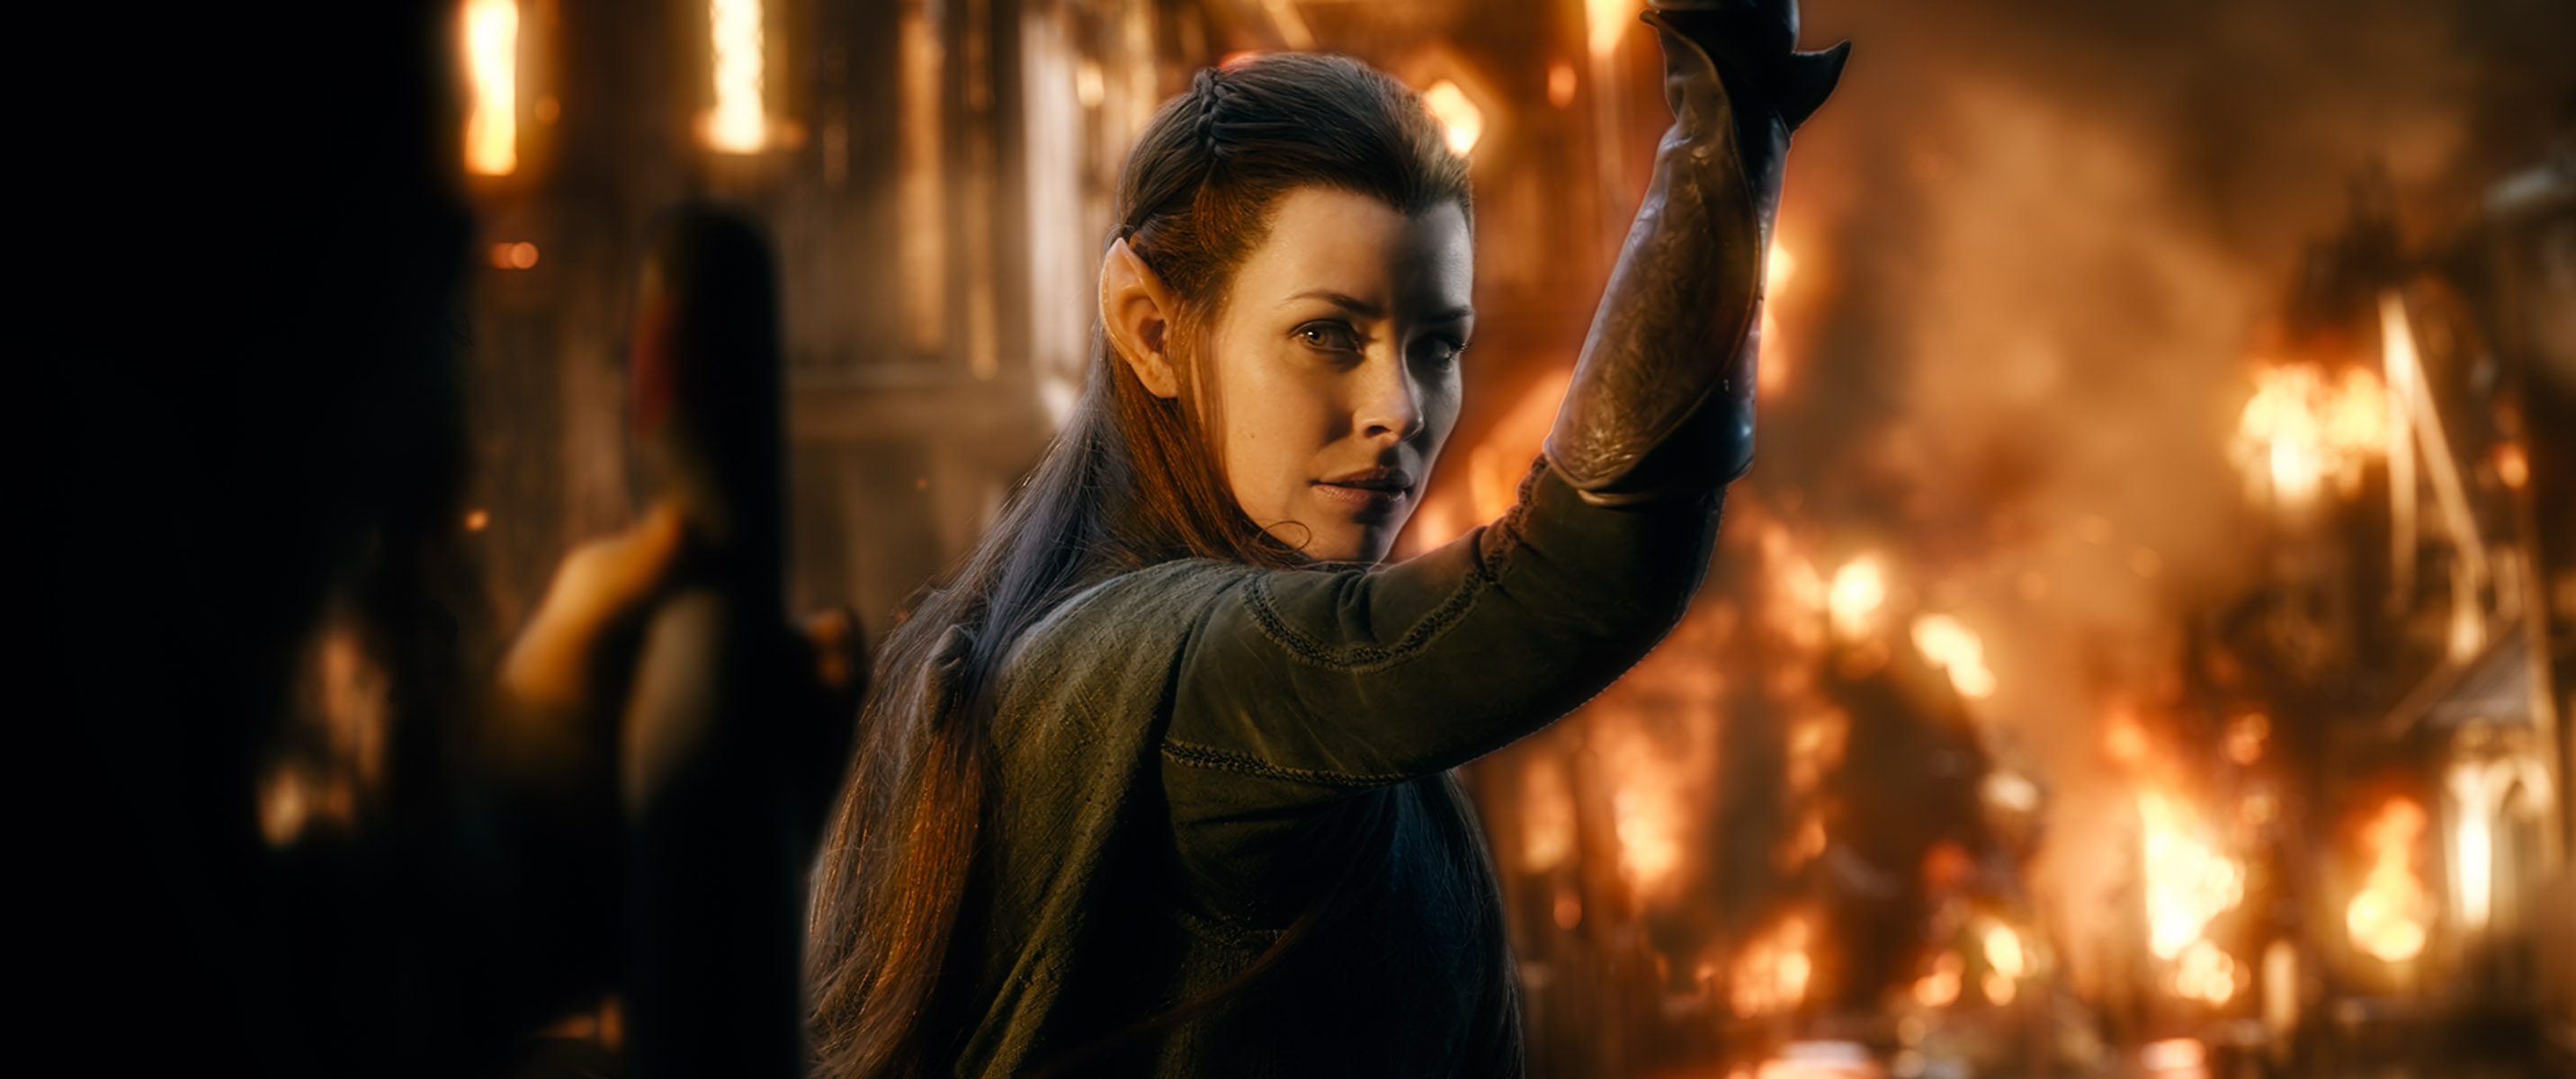 Evangeline Lilly Portrays Tauriel In The Hobbit Films